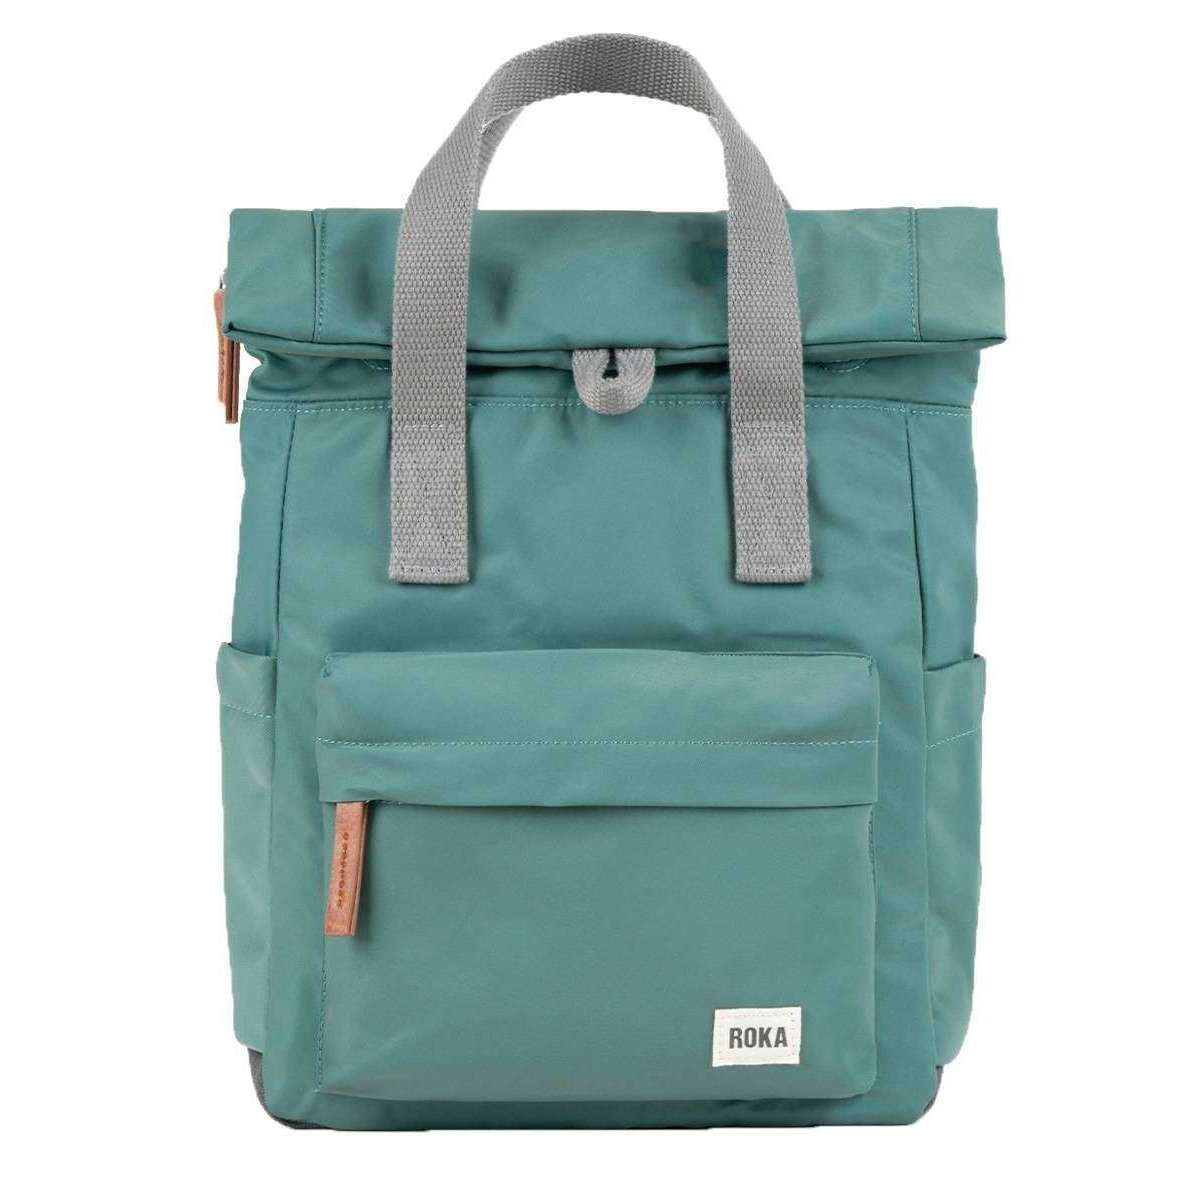 Roka Canfield B Small Sustainable Nylon Backpack - Sage Green